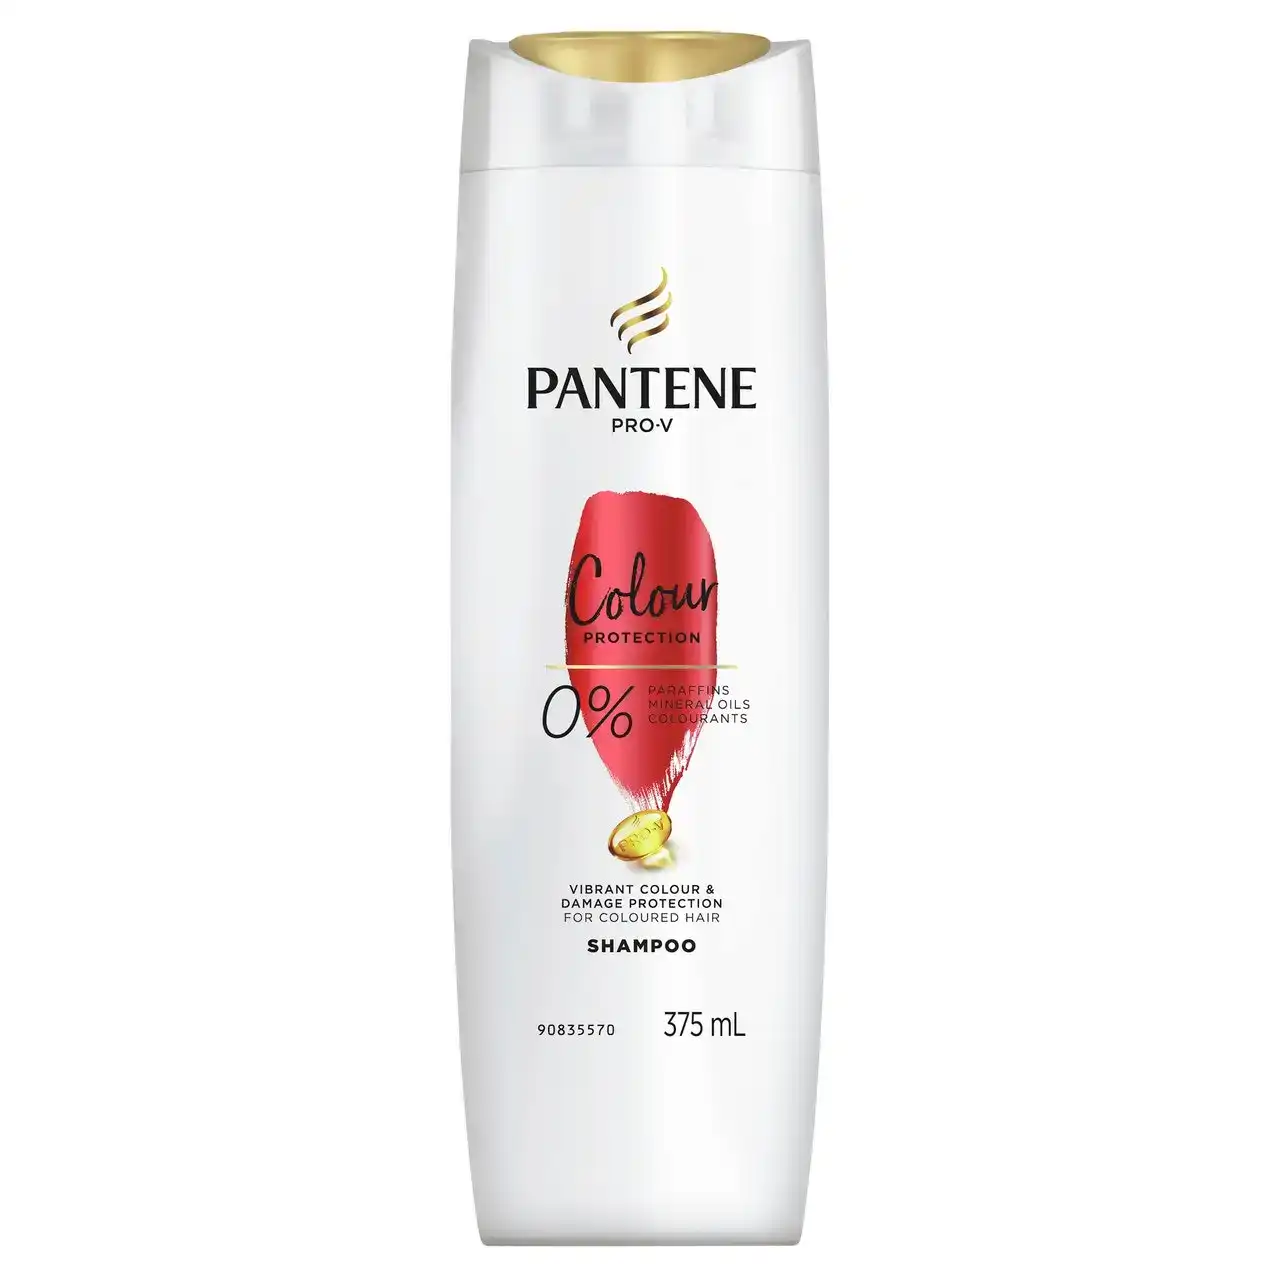 Pantene Pro-V Colour Protection Shampoo: Shampoo for Coloured Hair 375 ml